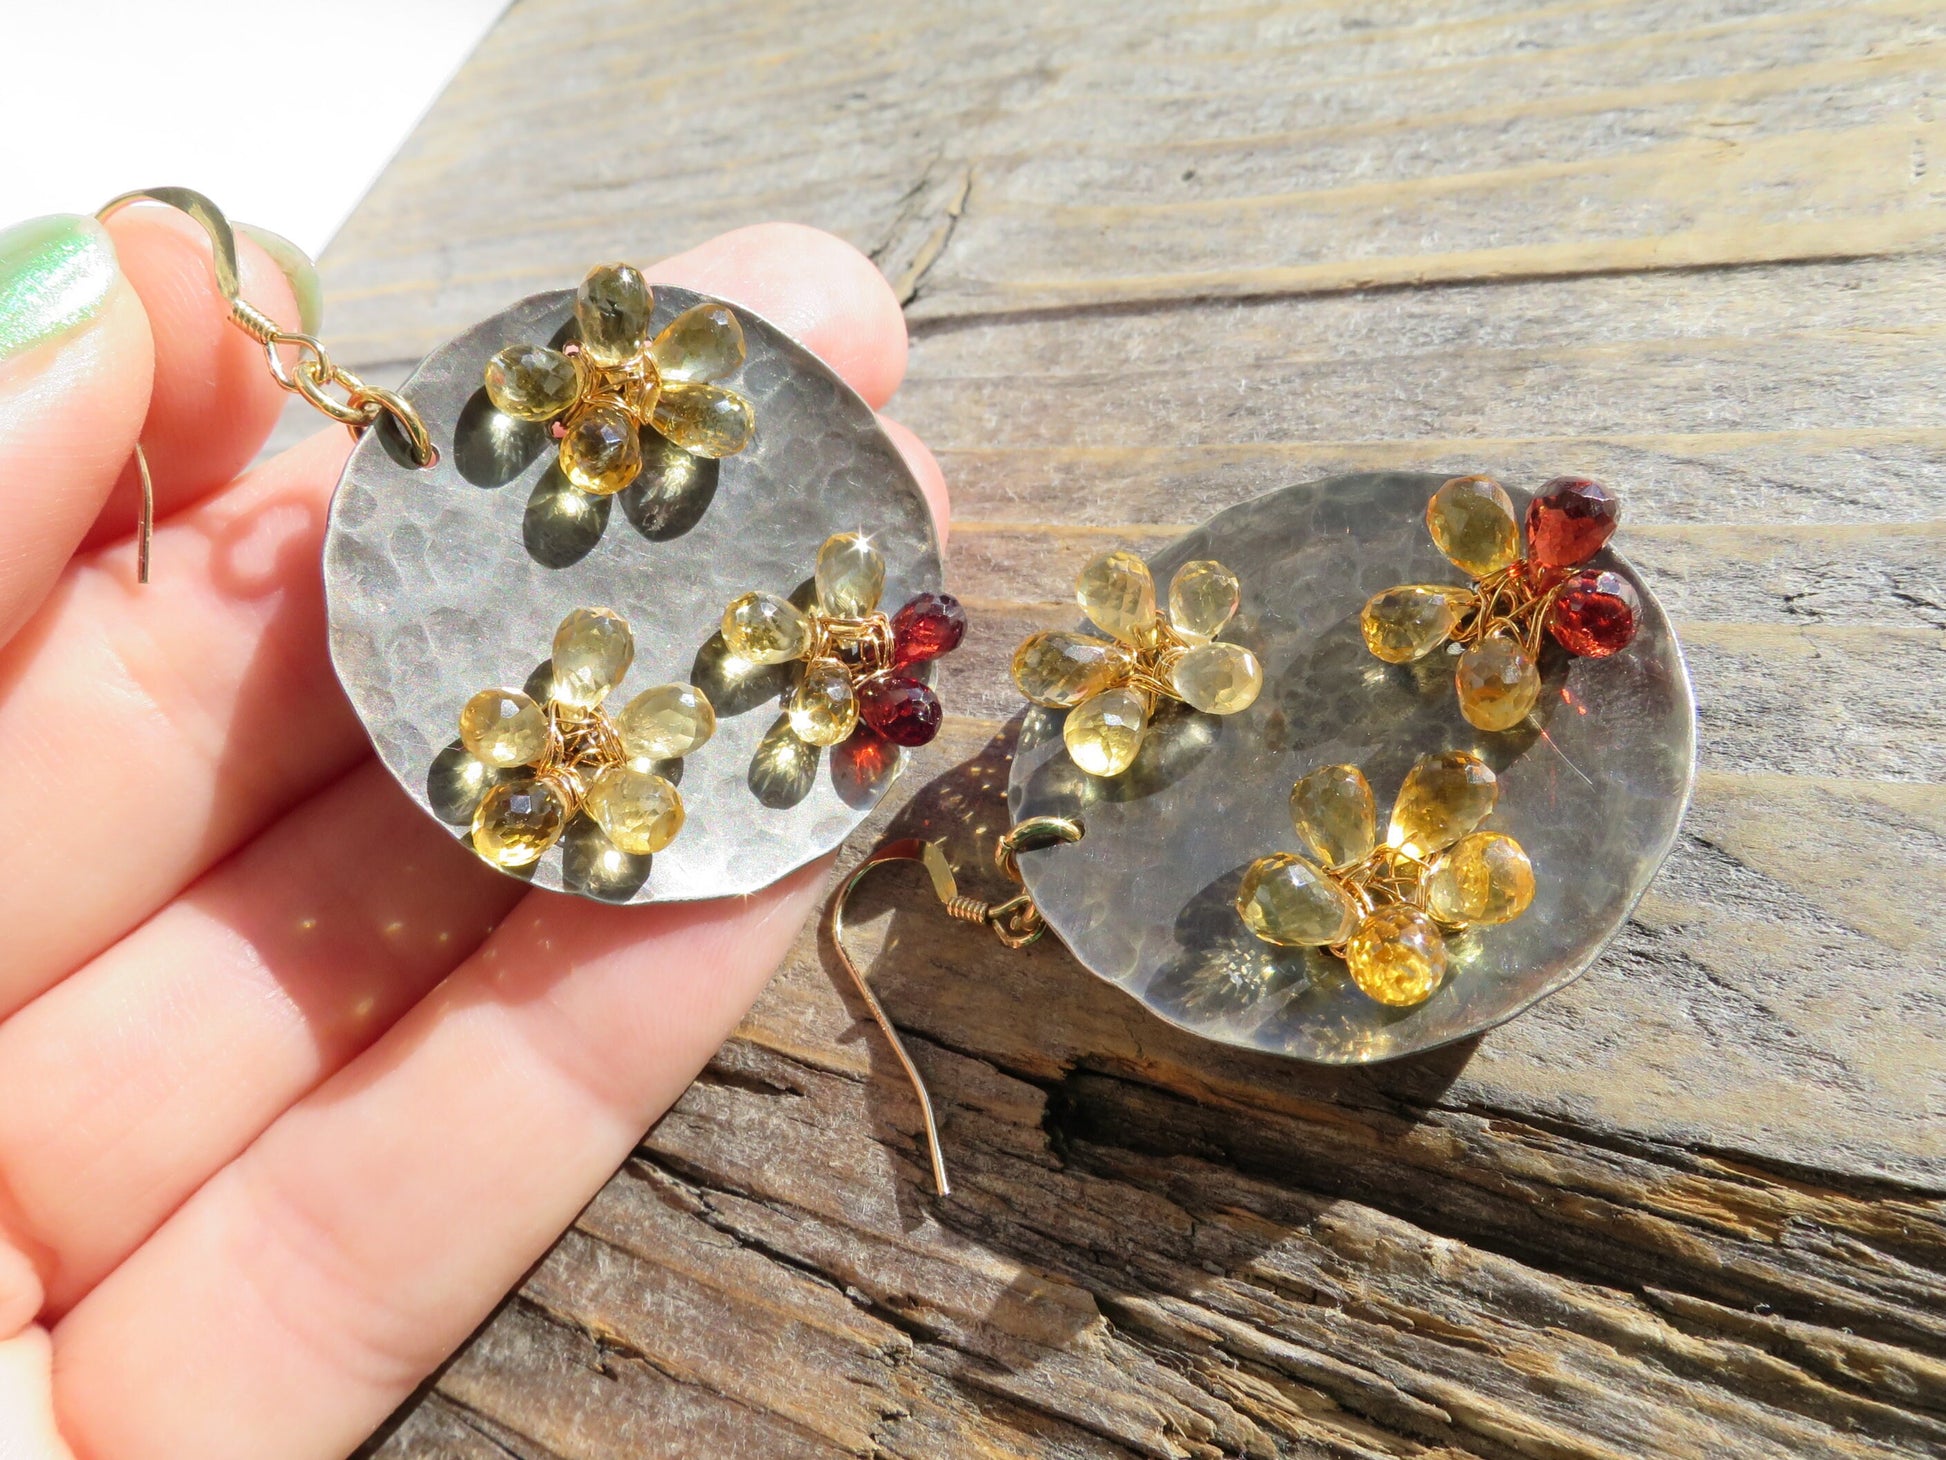 Unique earrings citrine and garnet gemstones drops brioletten gold filled ear hooks set in 925 Sterling Silver handmade natural gemstones